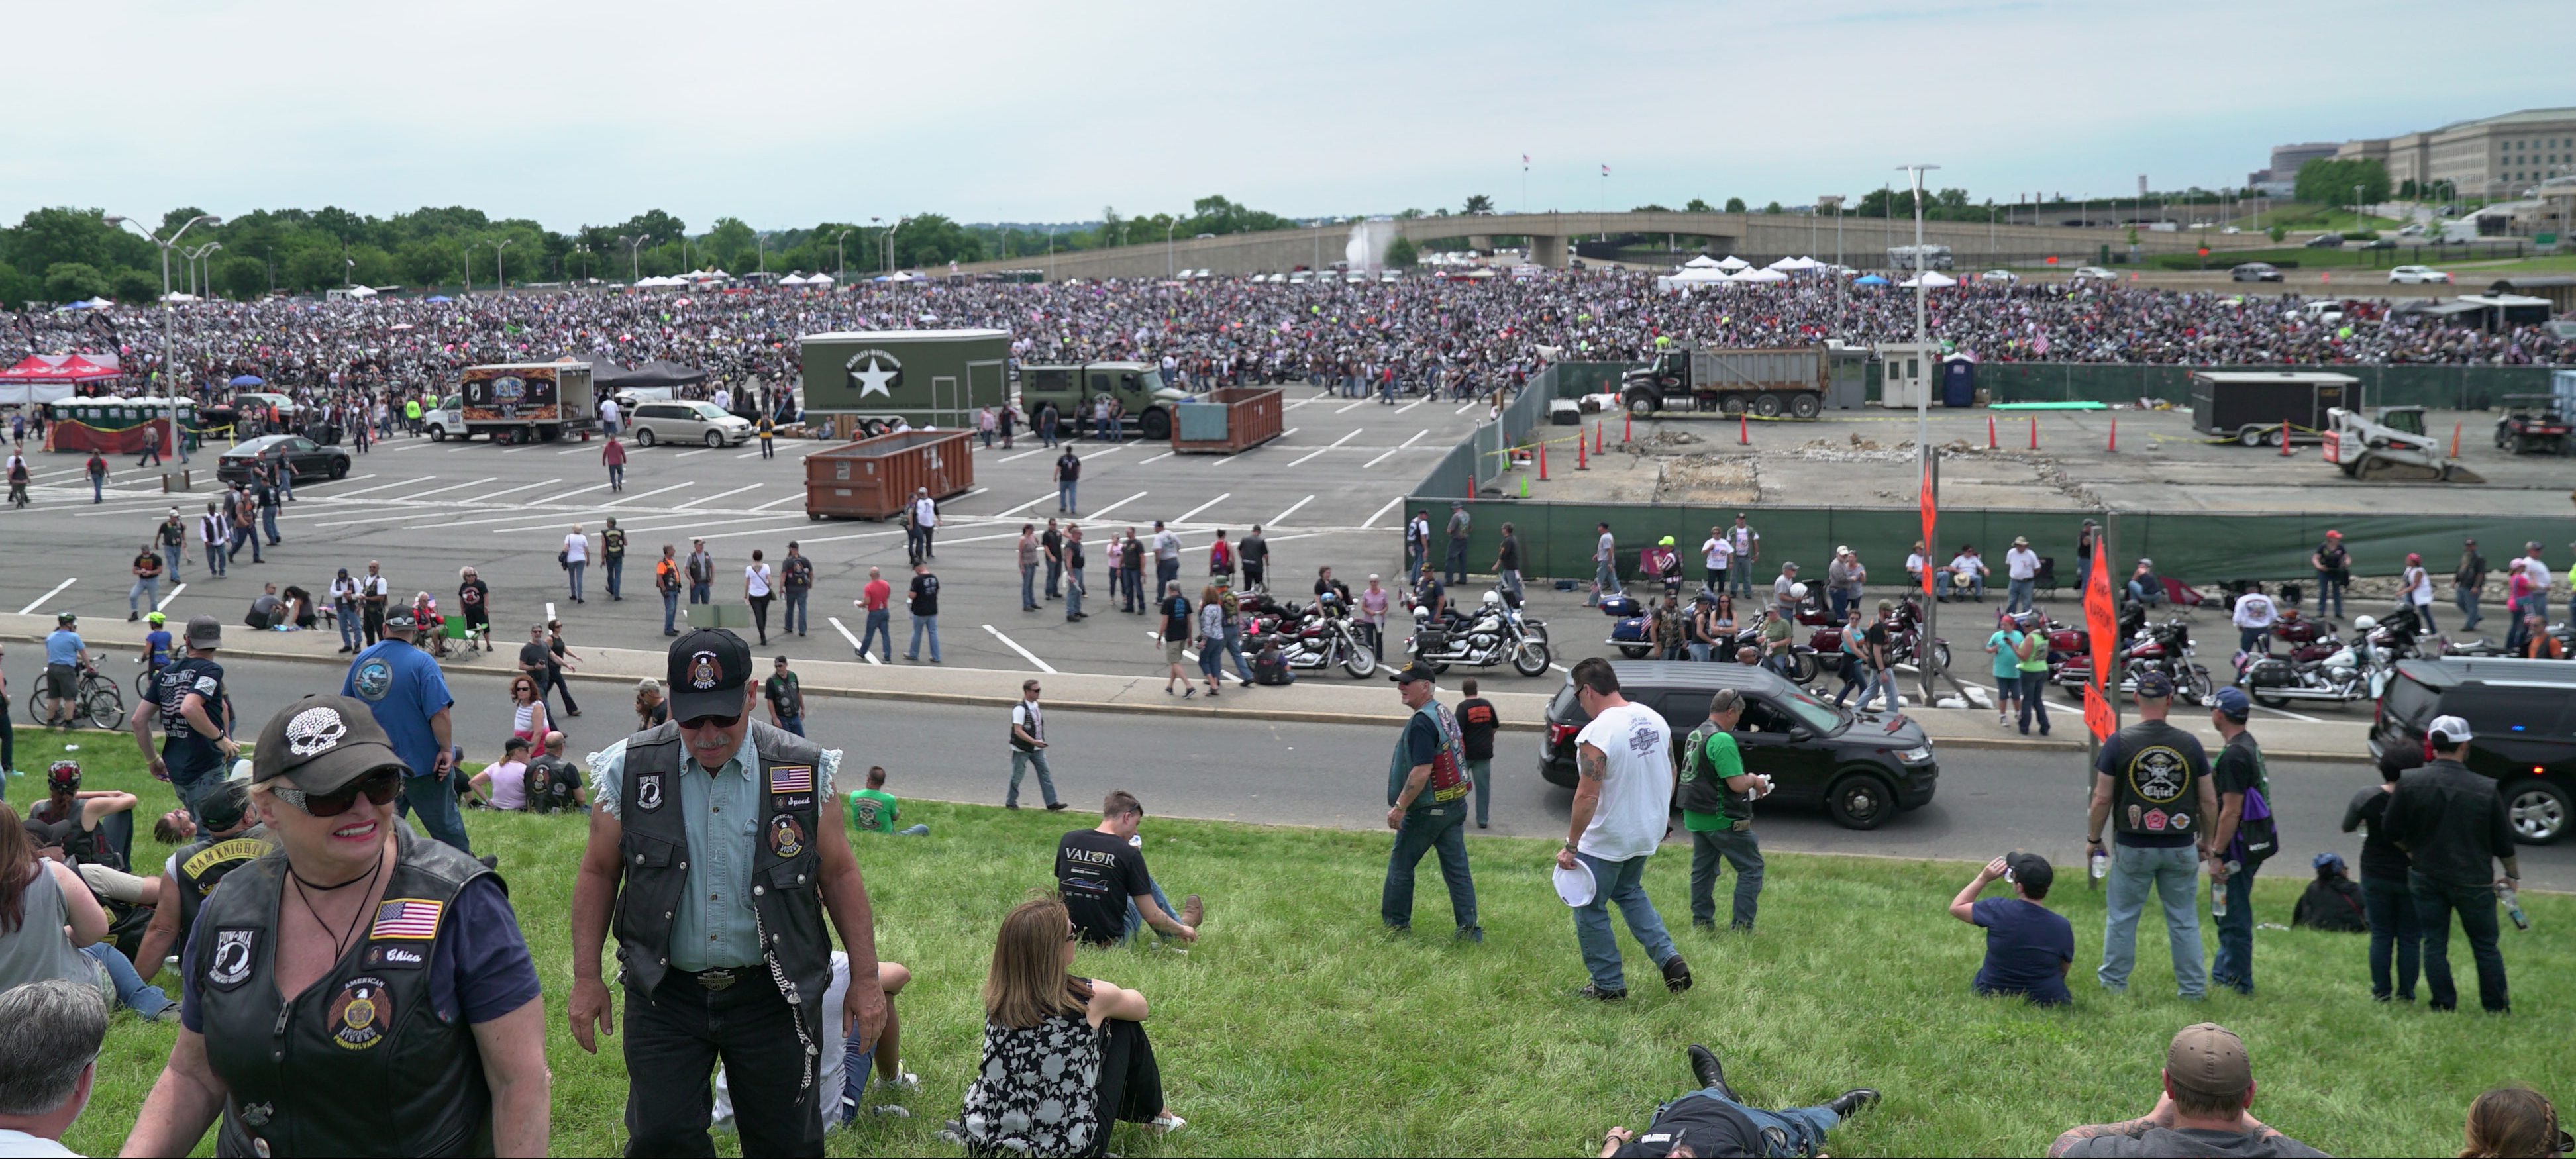 Crowd at Pentagon